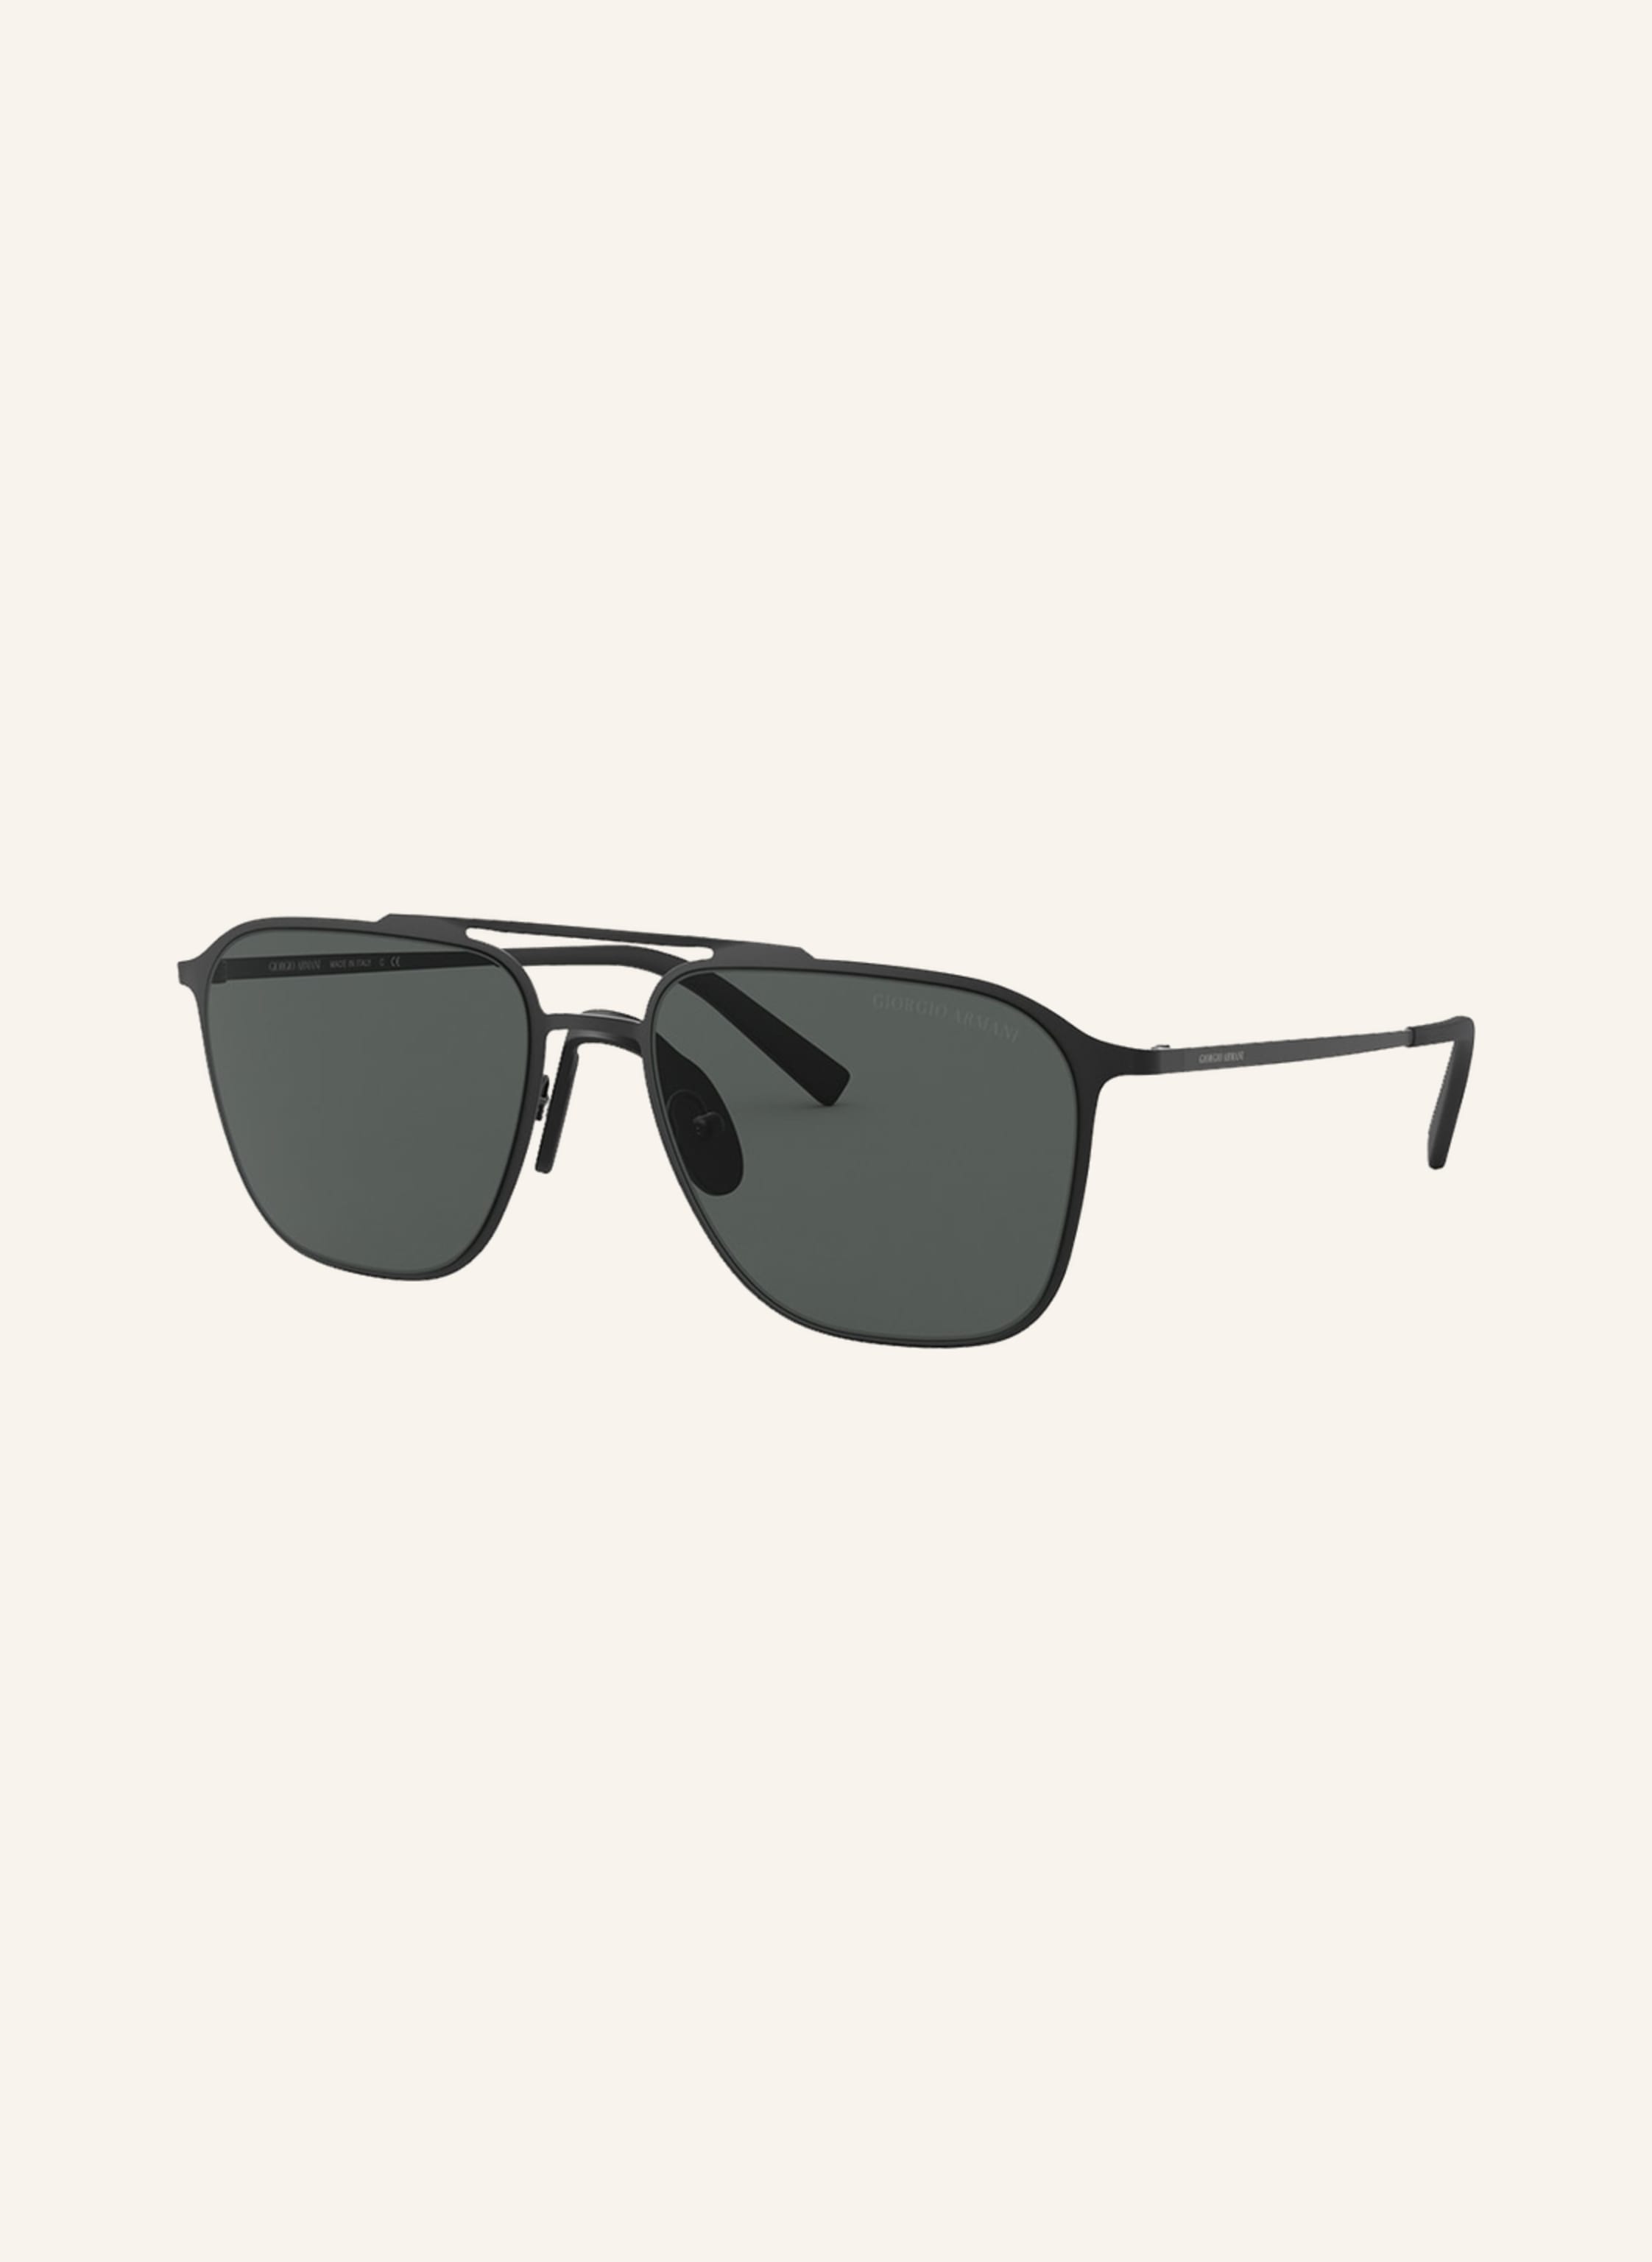 EMPORIO ARMANI Sunglasses AR6110 in 300187 - matte black/gray | Breuninger